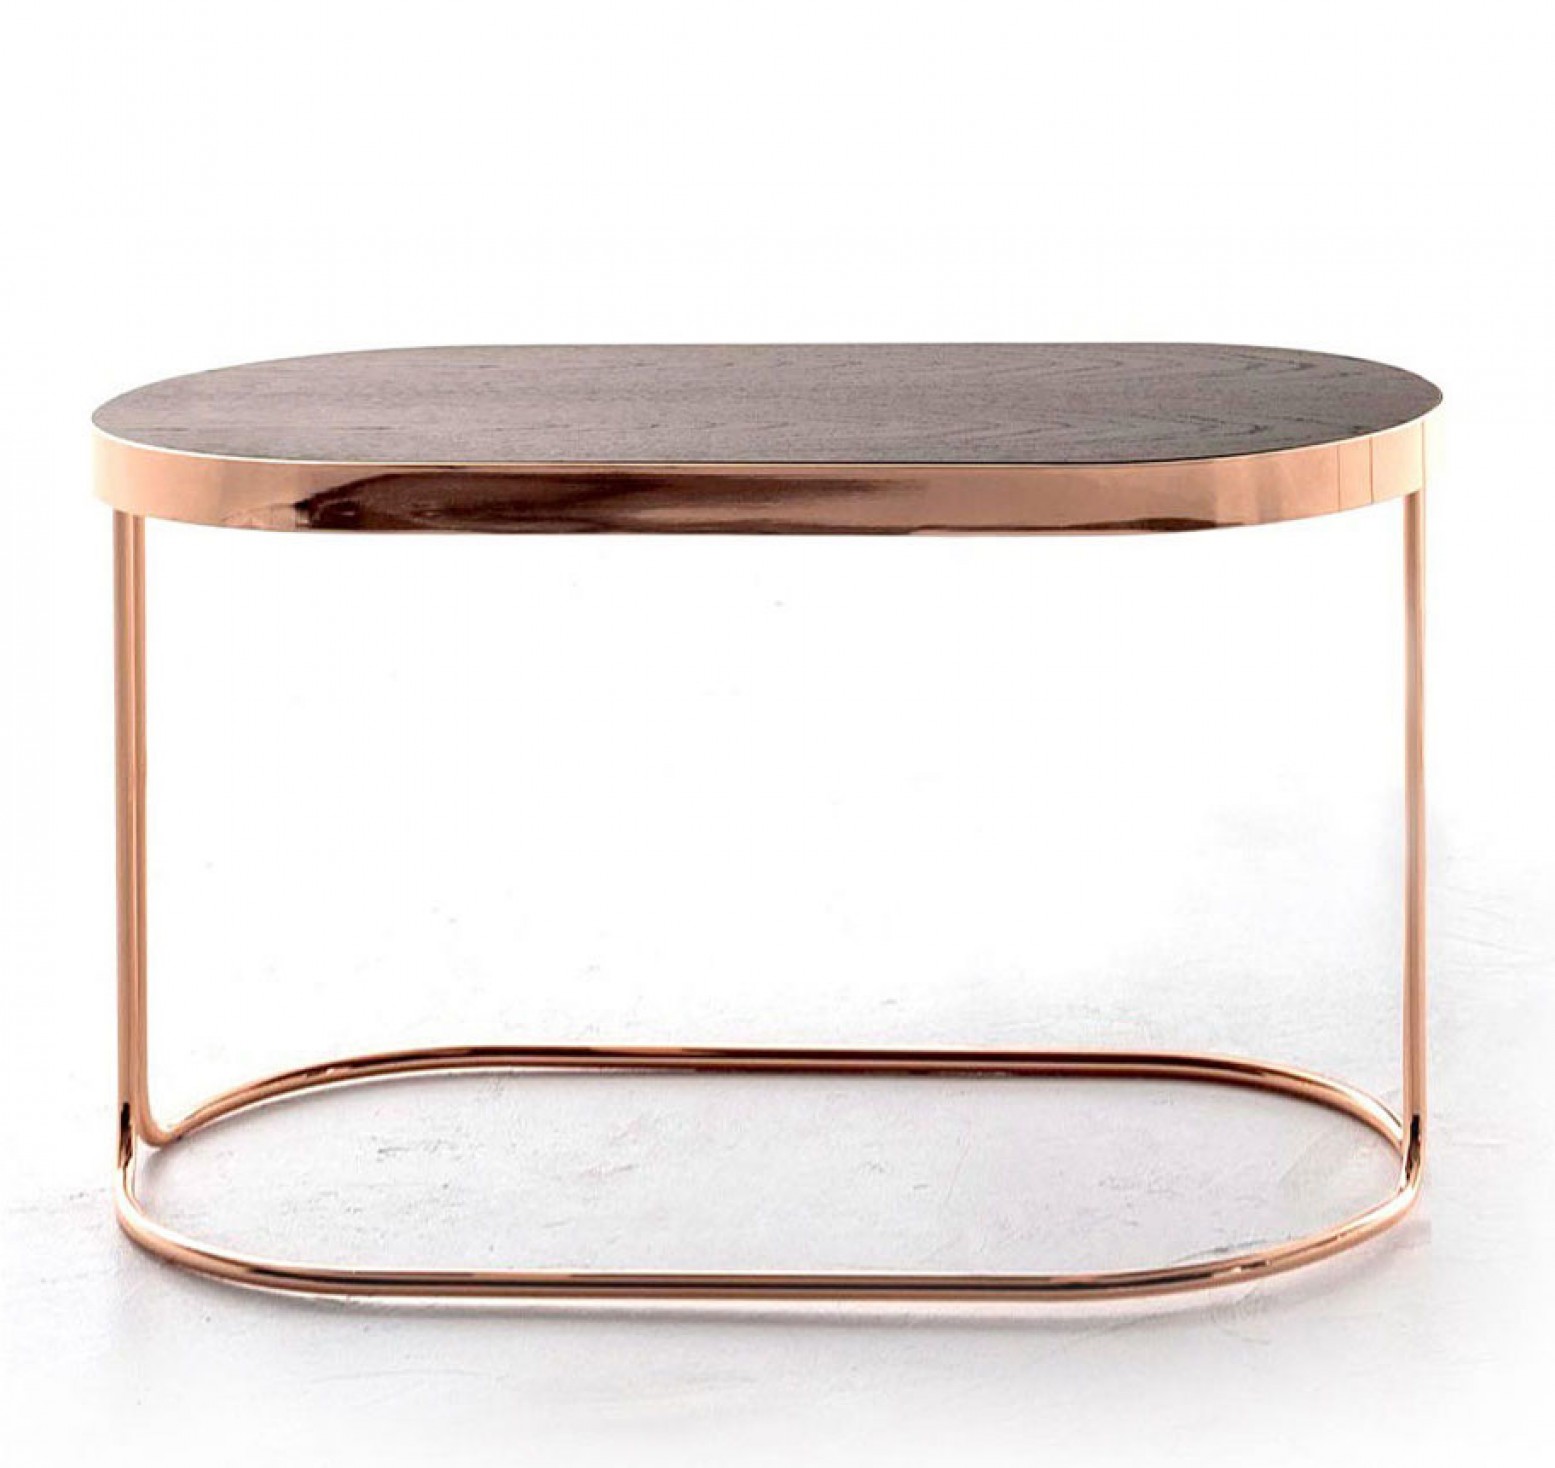 Cora Medium Coffee Table Coppered Chrome Metal Base Heat Treated Dark Oak Wood Top Buy Online At Best Price